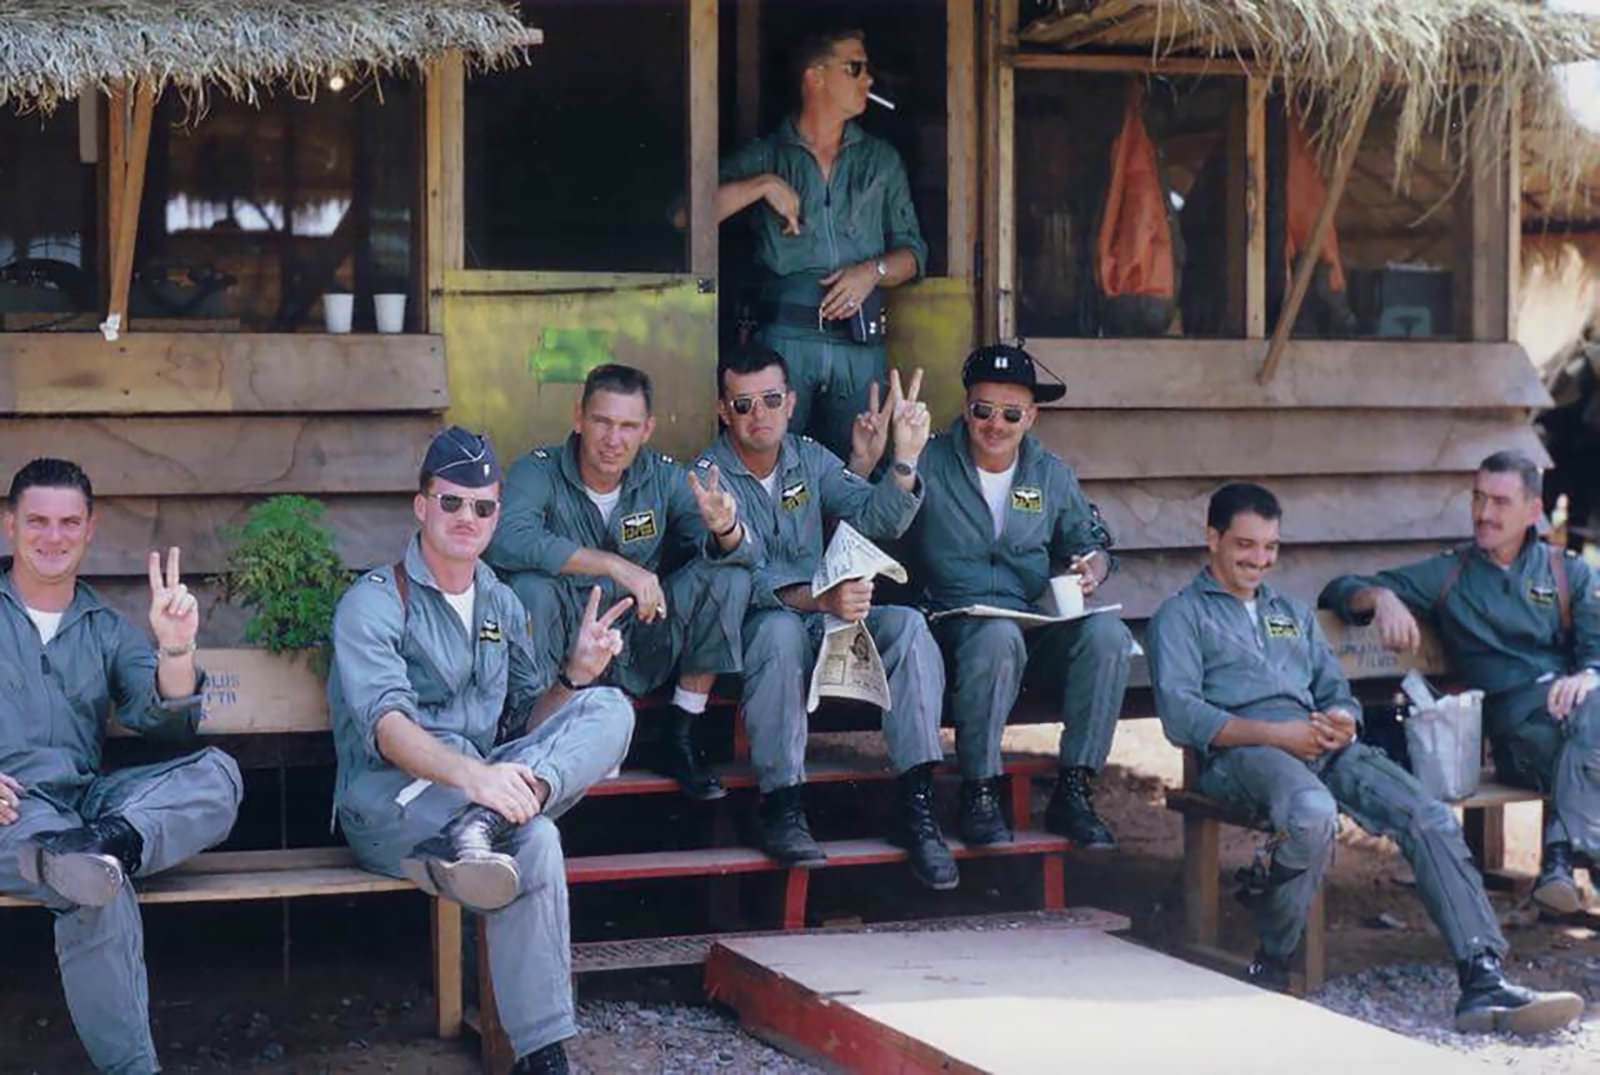 The pilots. From left, Capt. Tom Boatman, 1st Lt. John Morrissey, Capt. Charlie Copin, Capt. Matt Kelch, 1st Lt. Sam Waters, Capt. Ray Moss, 1st Lt. Frank Tullo, Maj. Bill Hosmer.